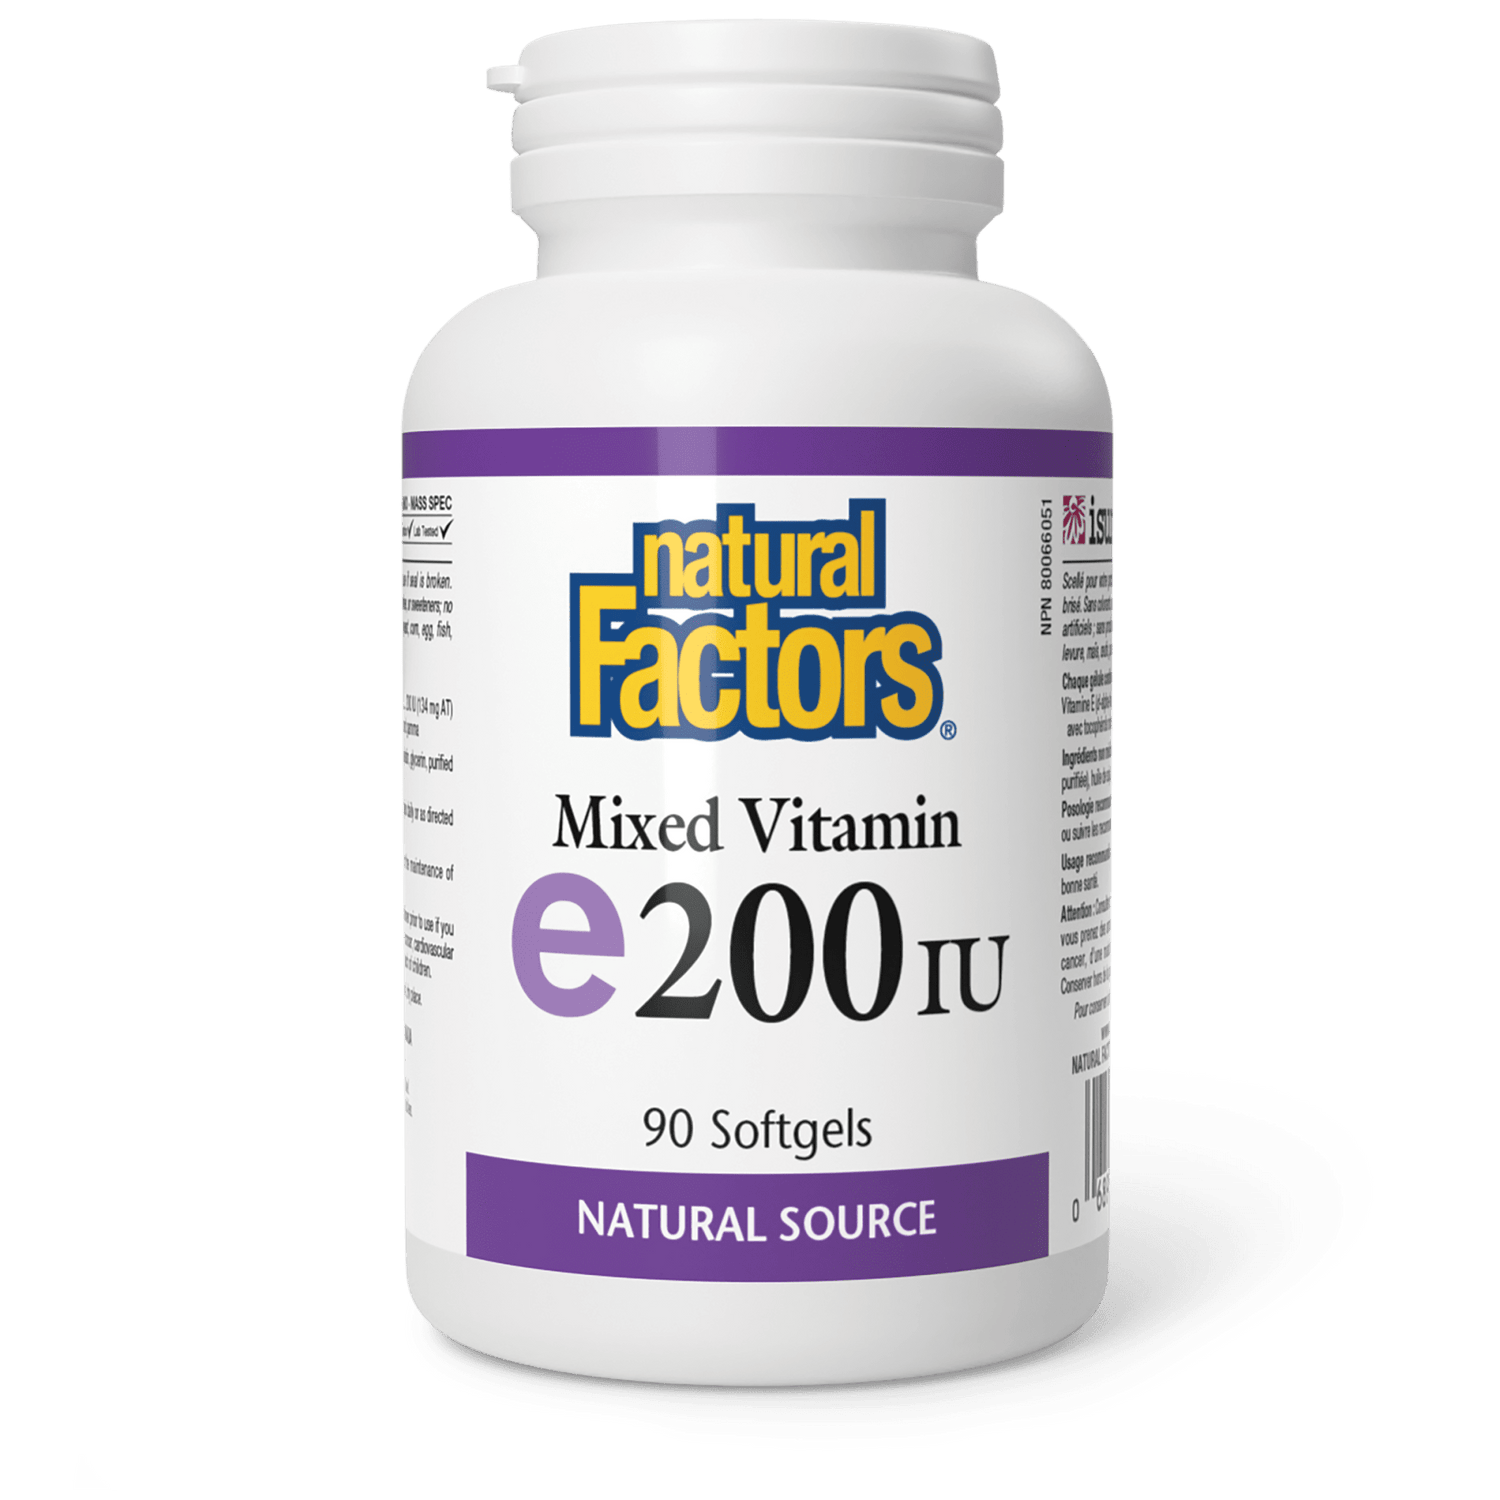 Mixed Vitamin E 200 IU, Natural Source, Natural Factors|v|image|1400